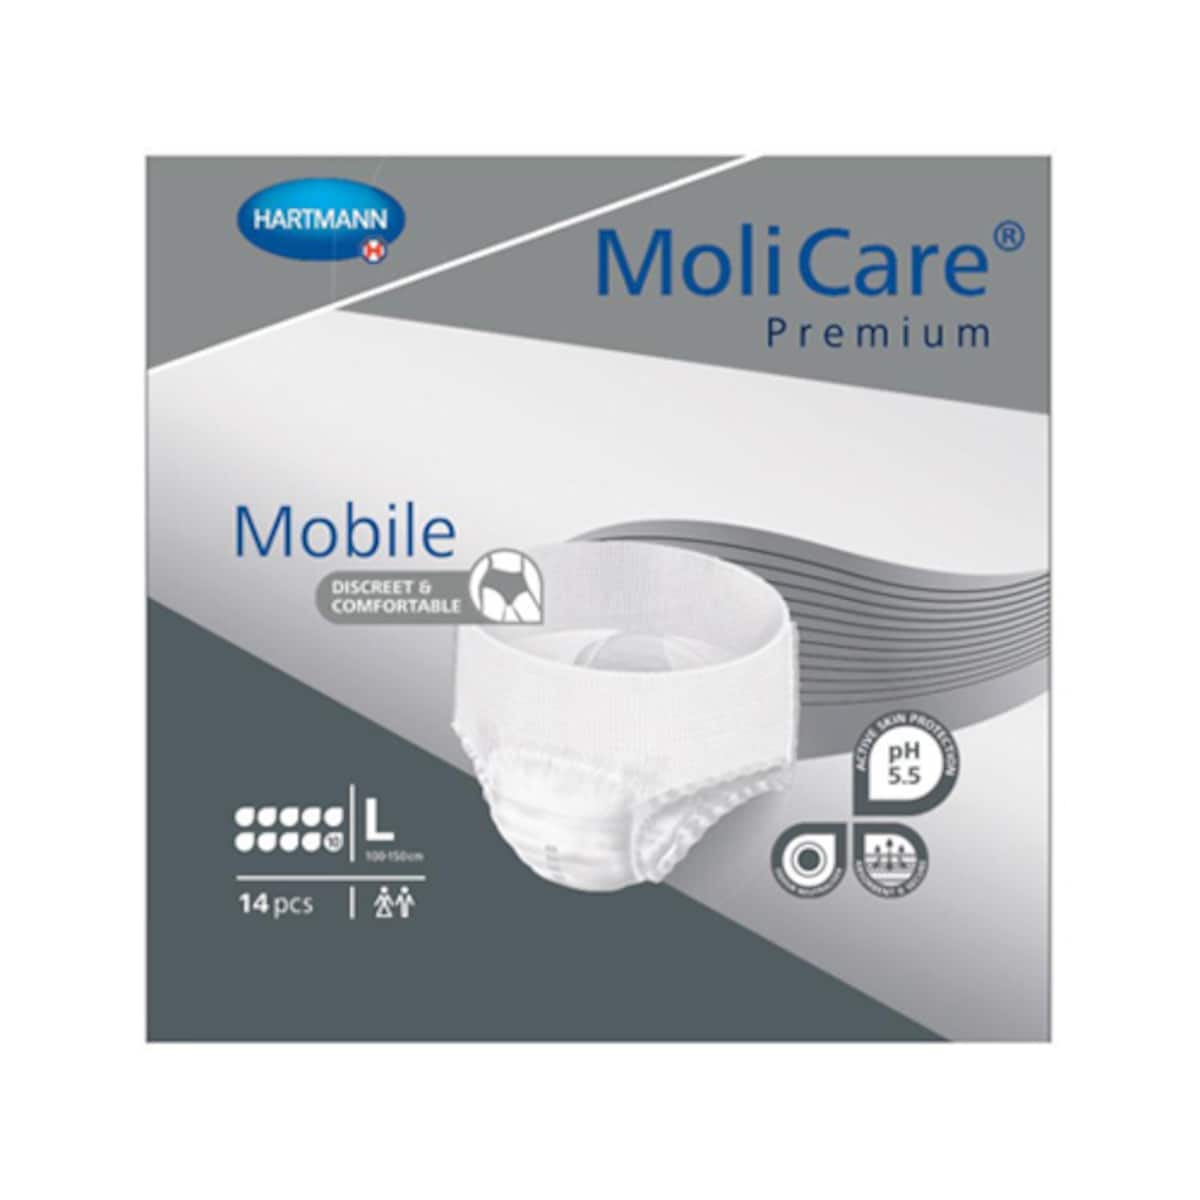 MoliCare Premium Mobile 10 Drop Large 14 Pack